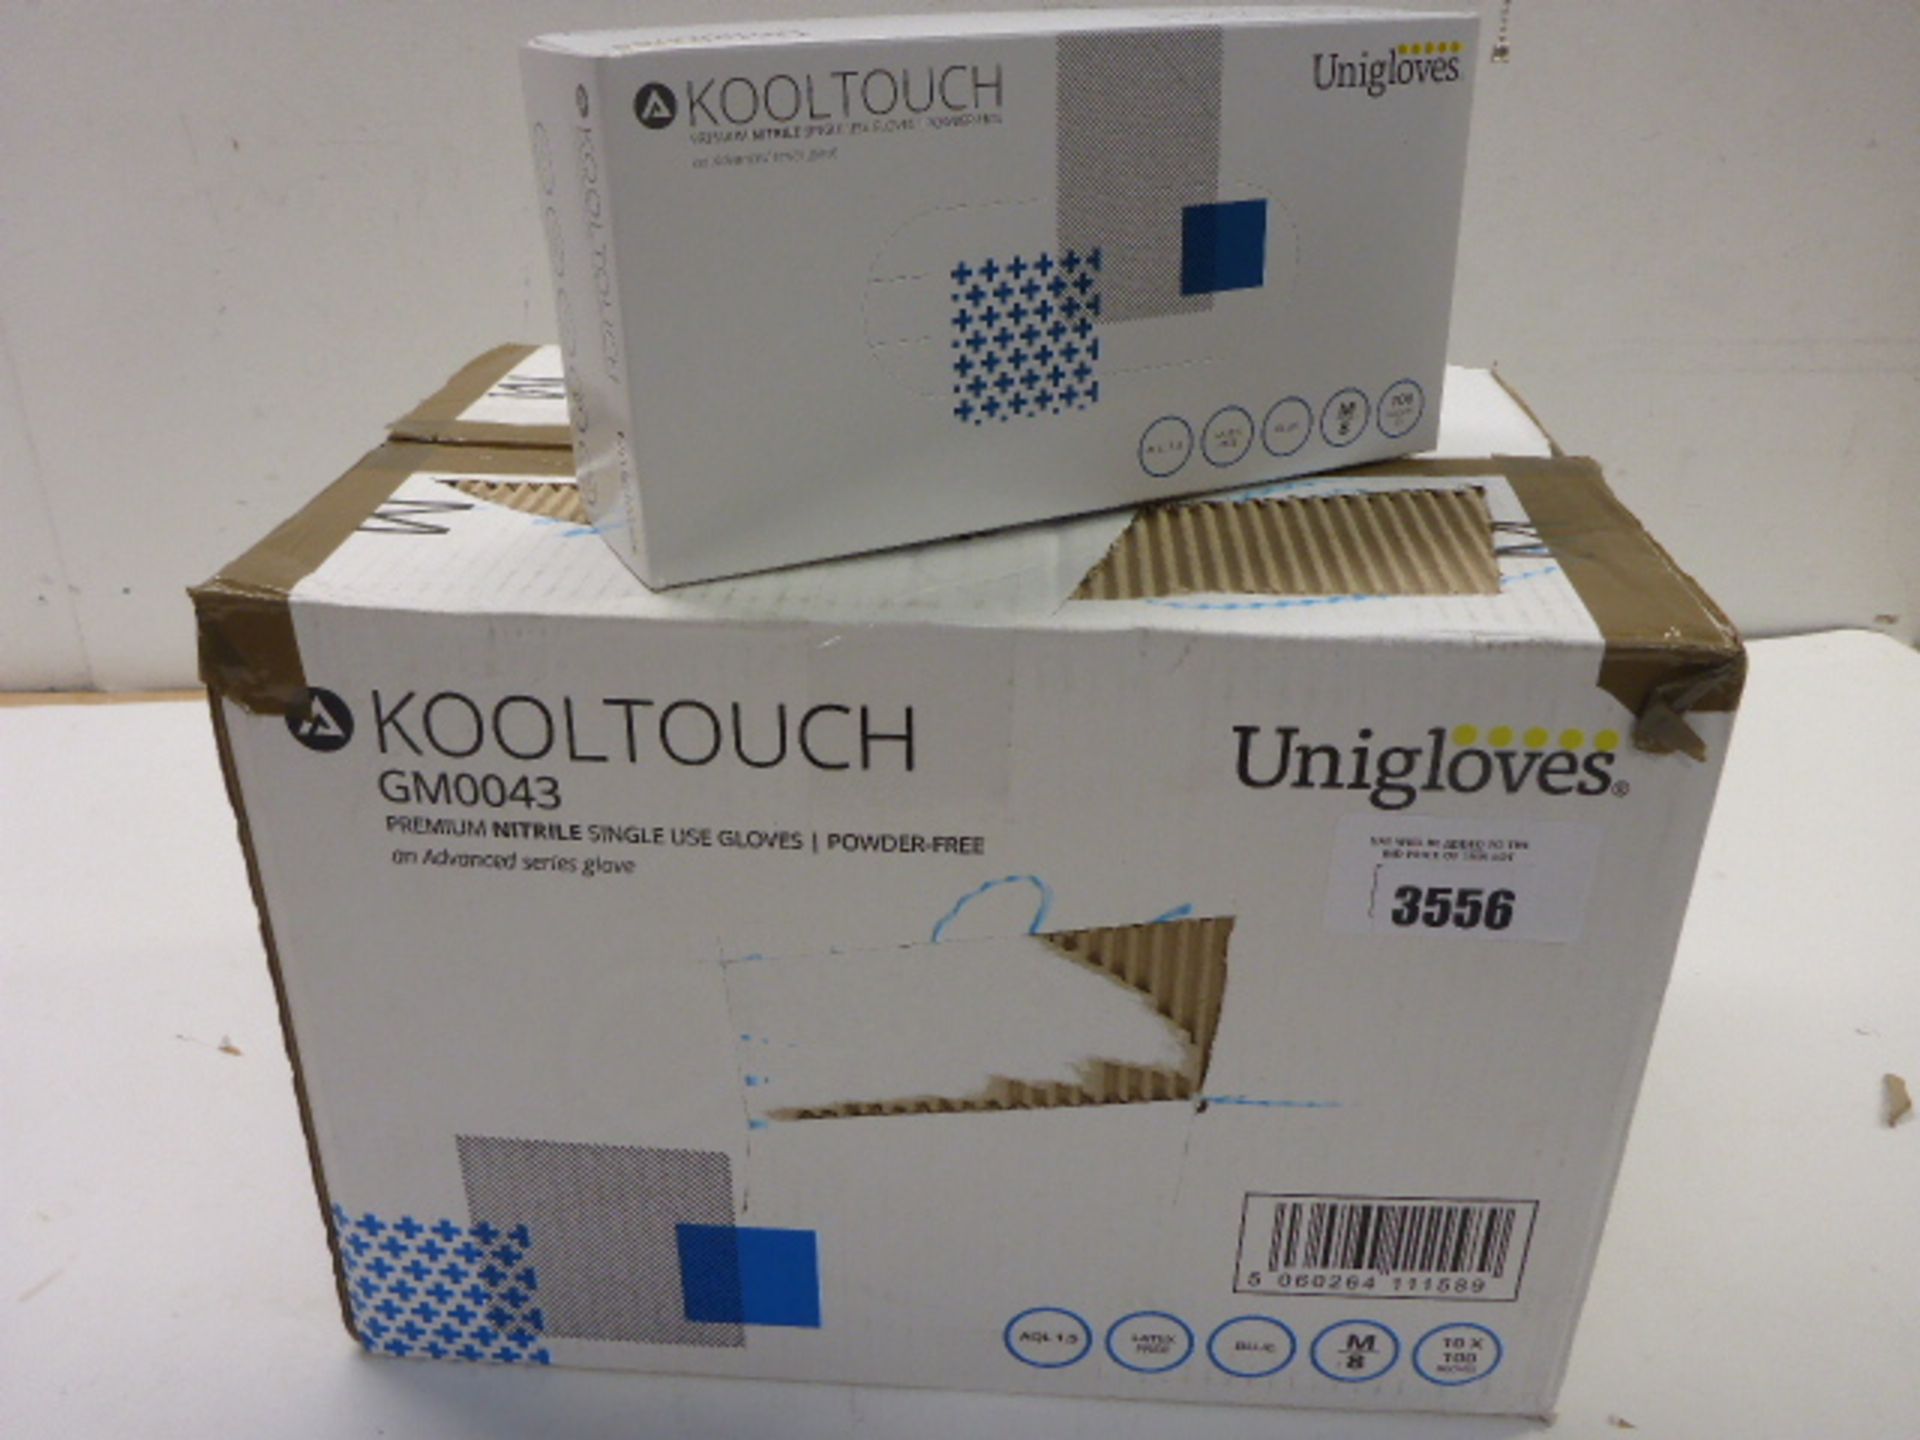 10 packs of 100 Medium Kool touch single use gloves